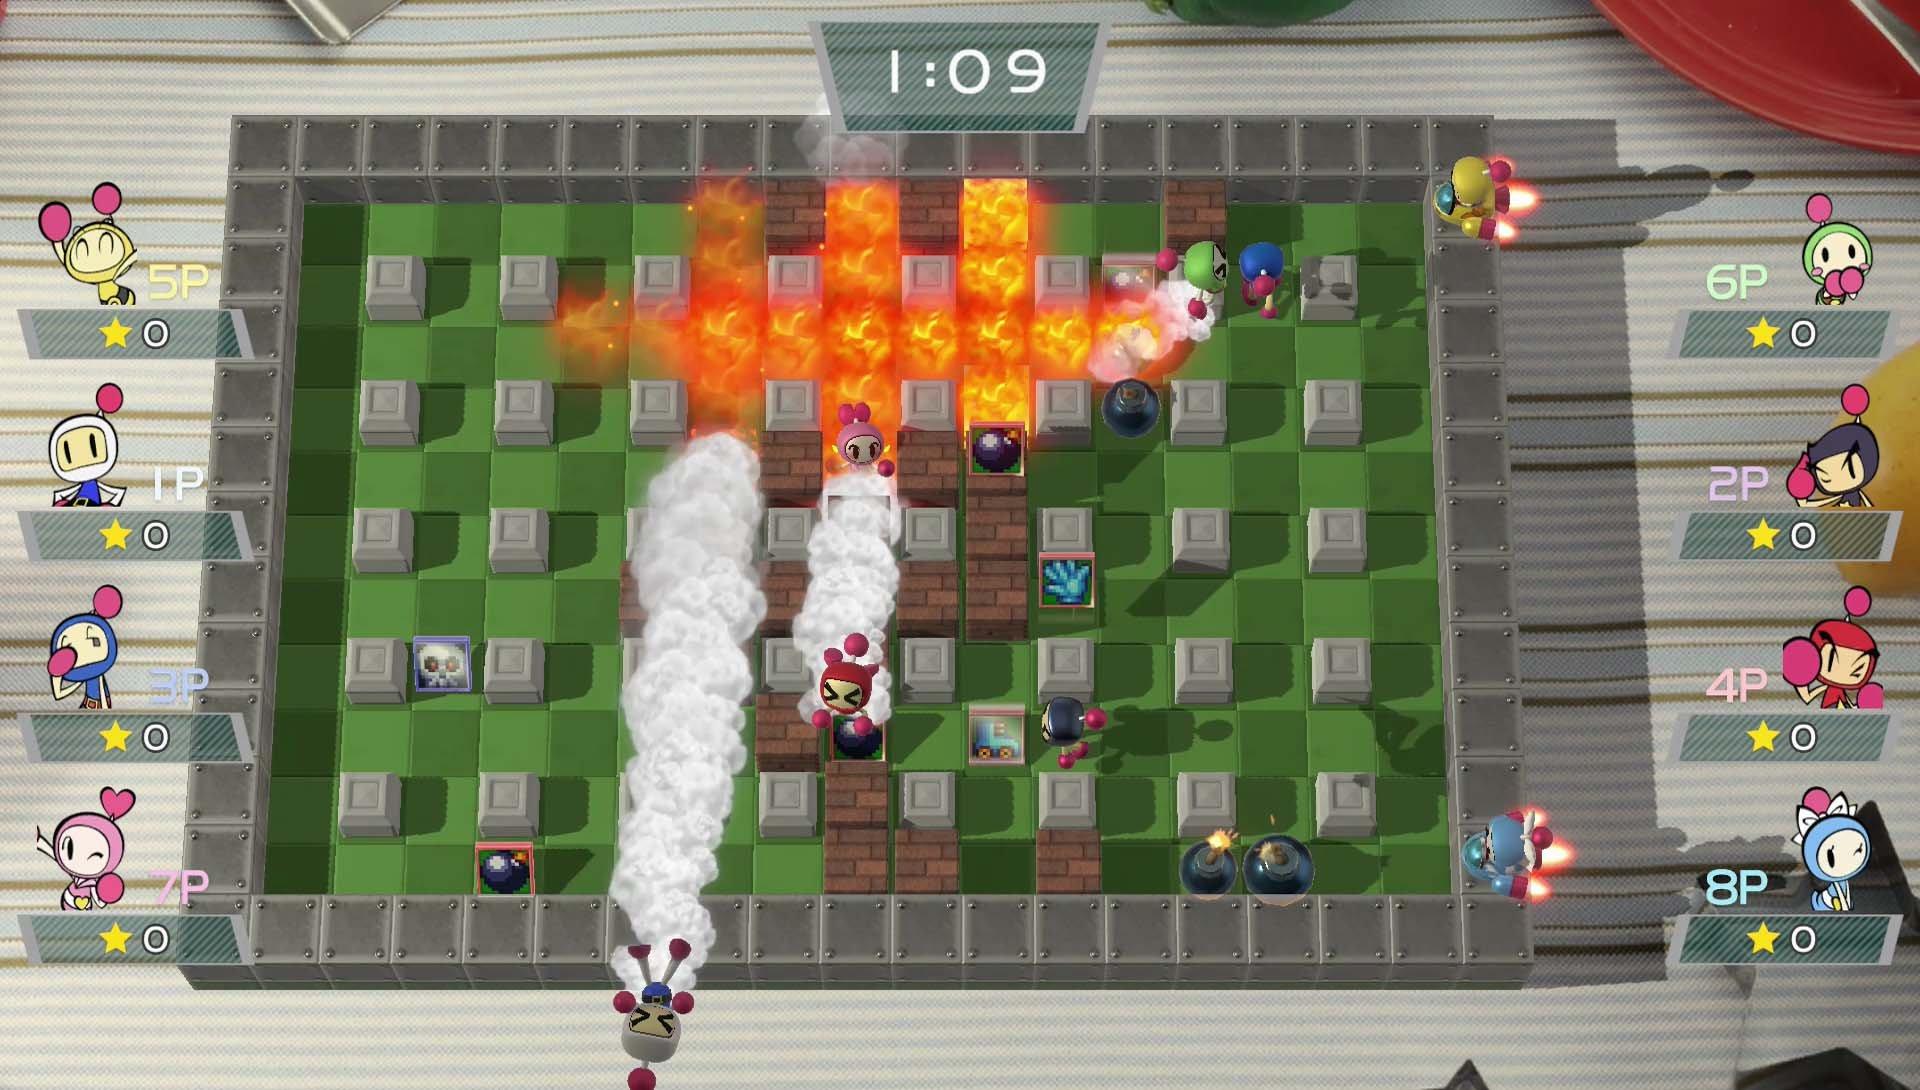  Super Bomberman R - PlayStation 4 Shiny Edition